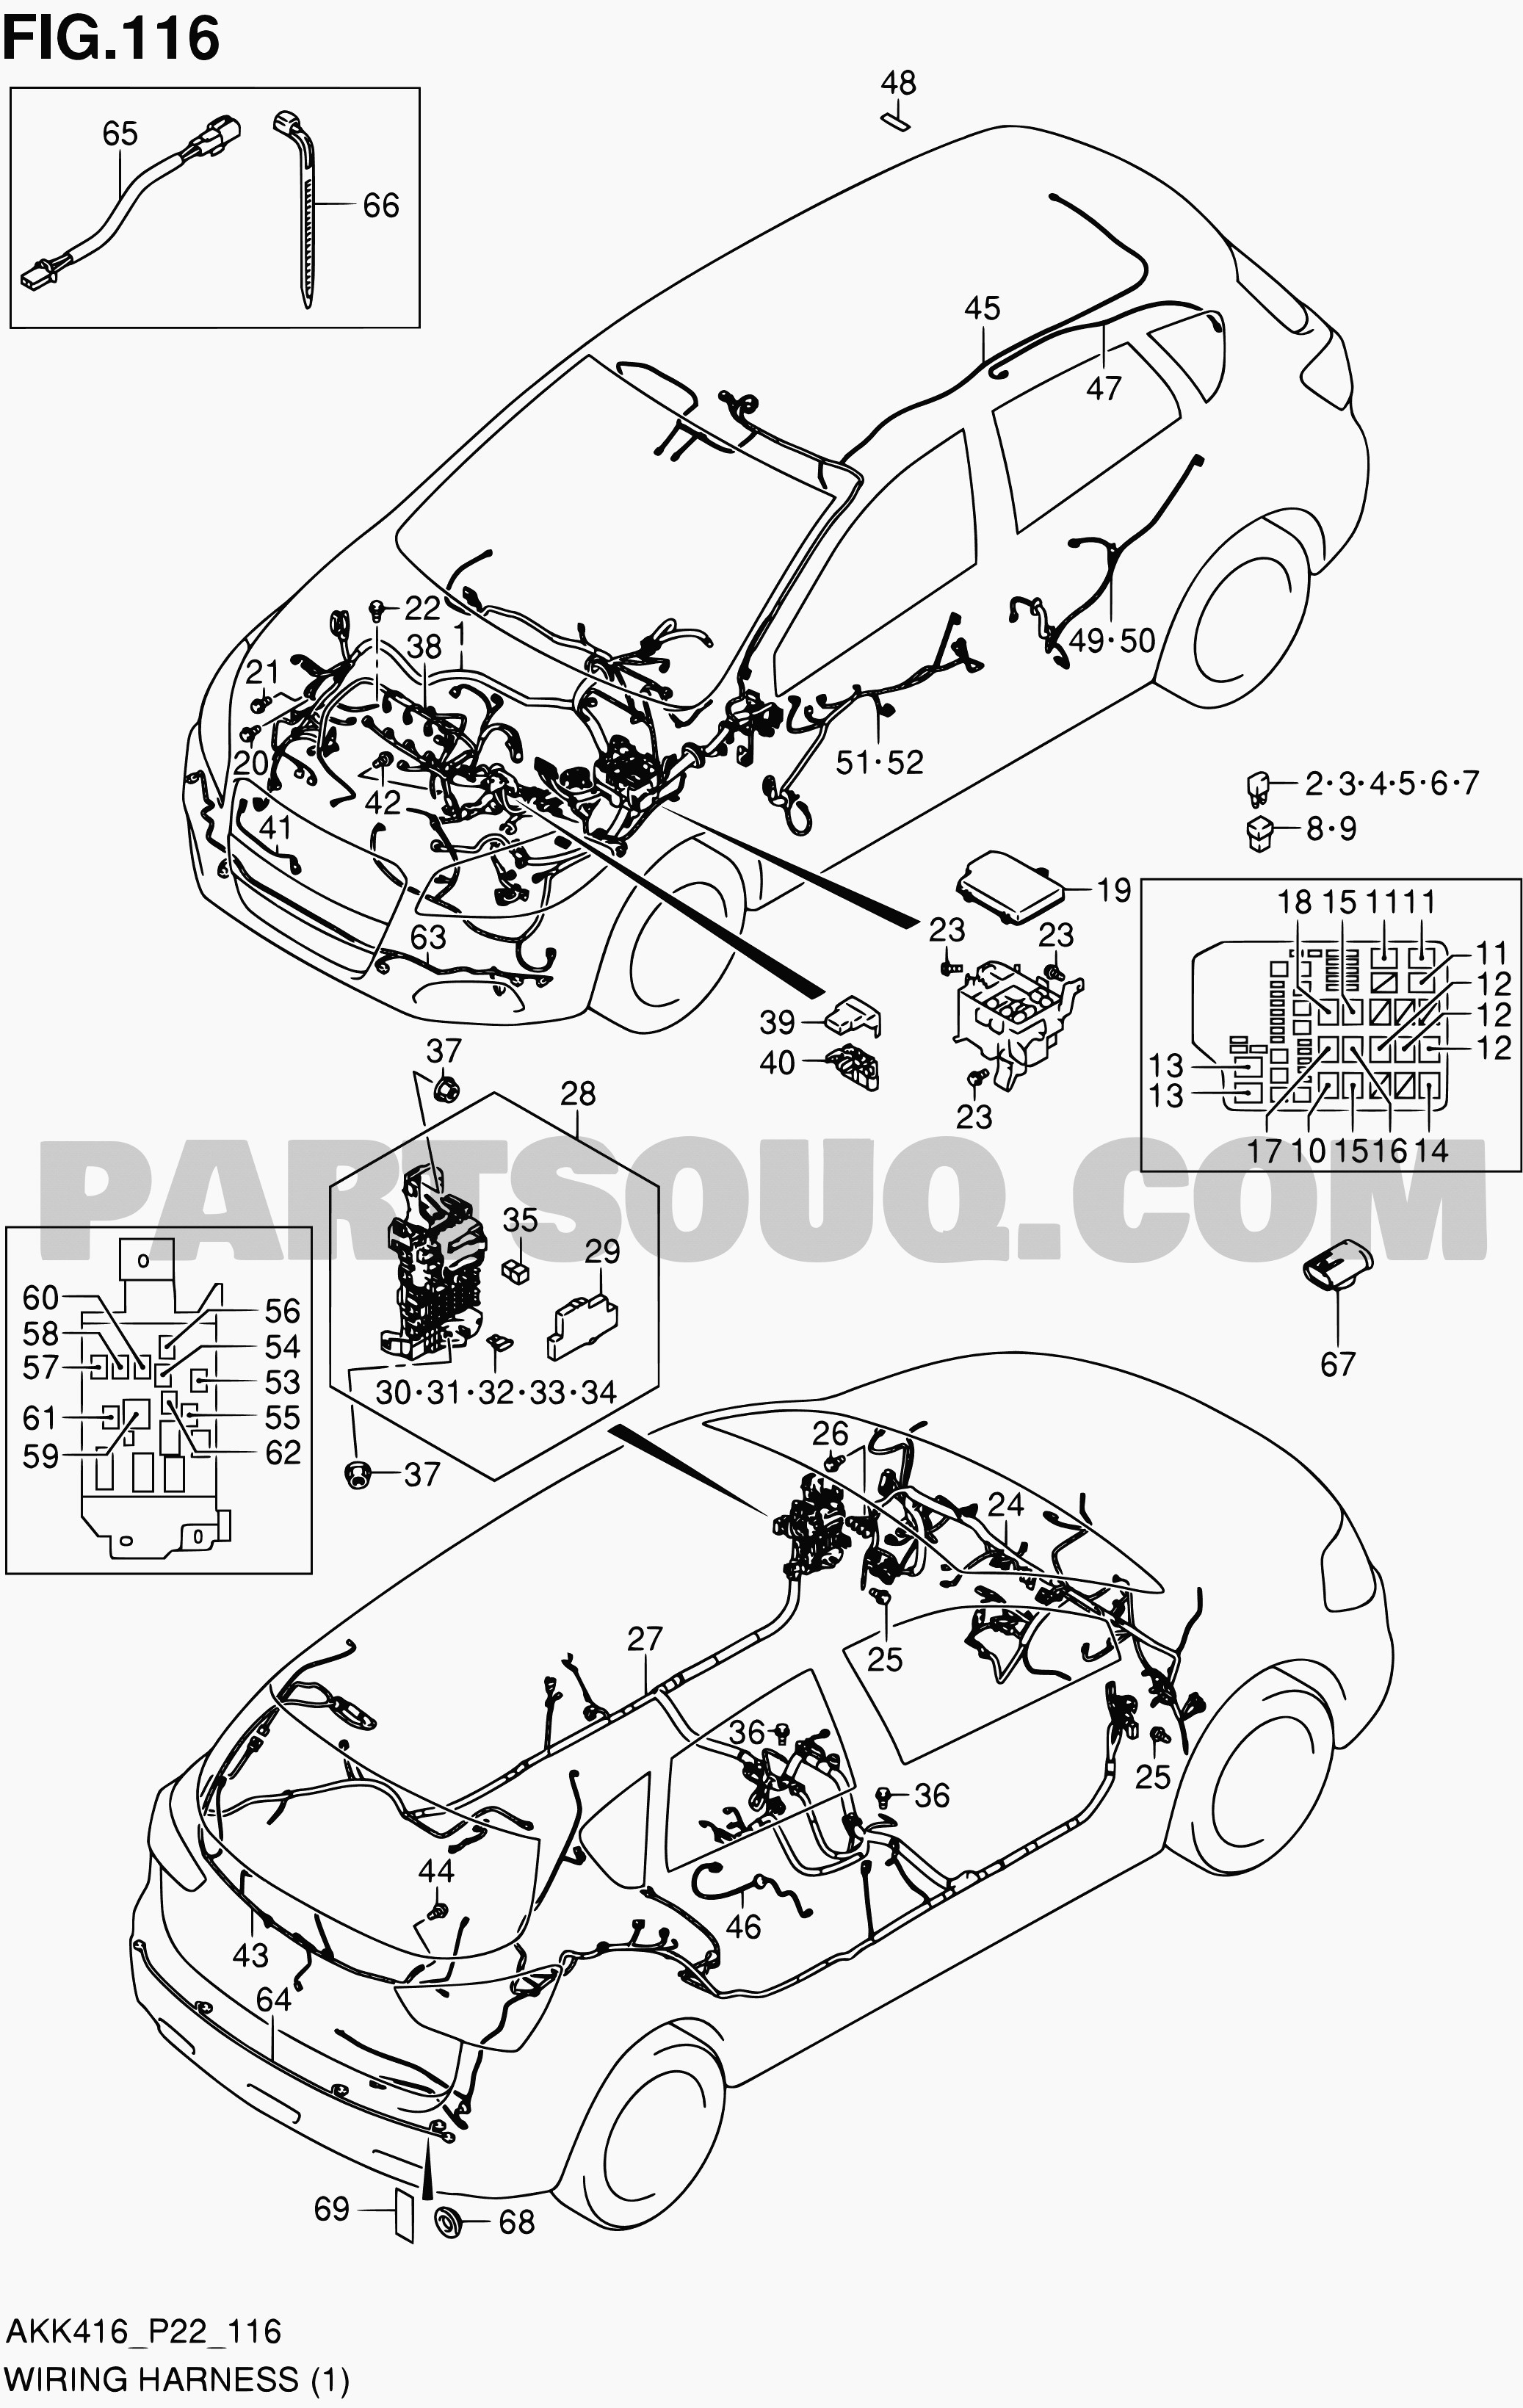 Car Parts Diagram Exterior Car Undercarriage Parts Diagram Exterior Car Parts Diagram Of Car Parts Diagram Exterior